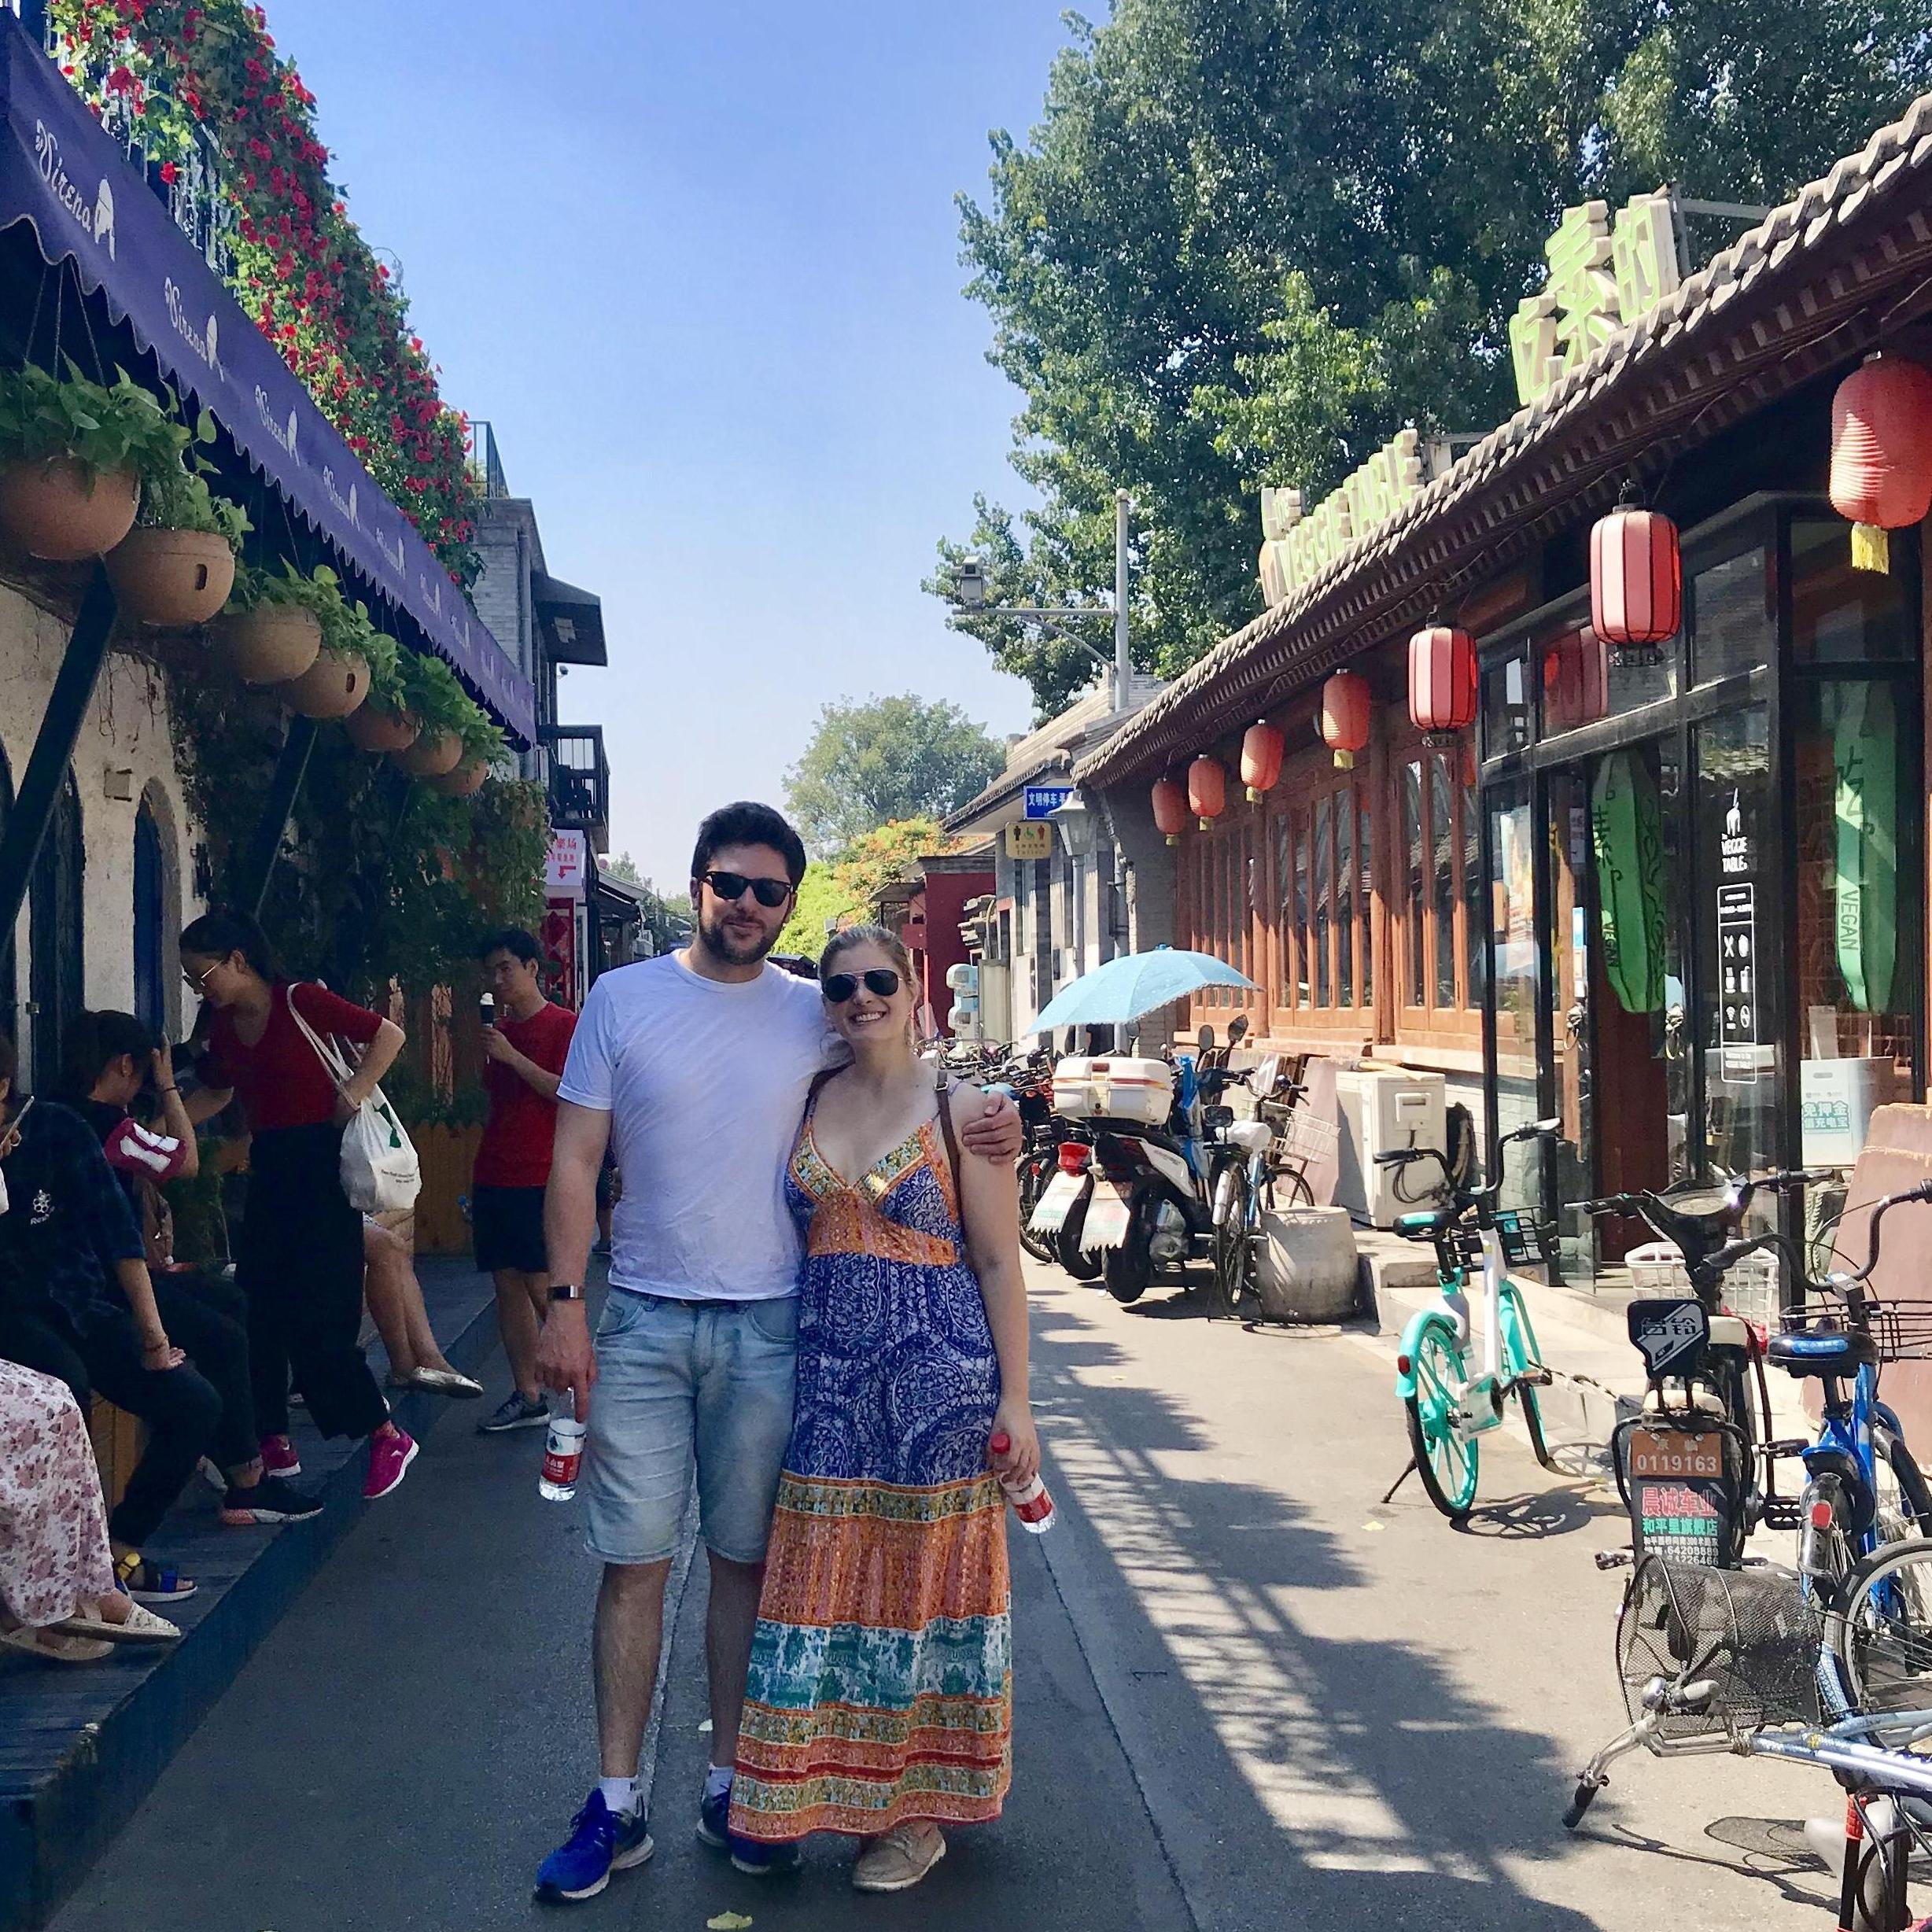 Exploring Beijing, China
2019